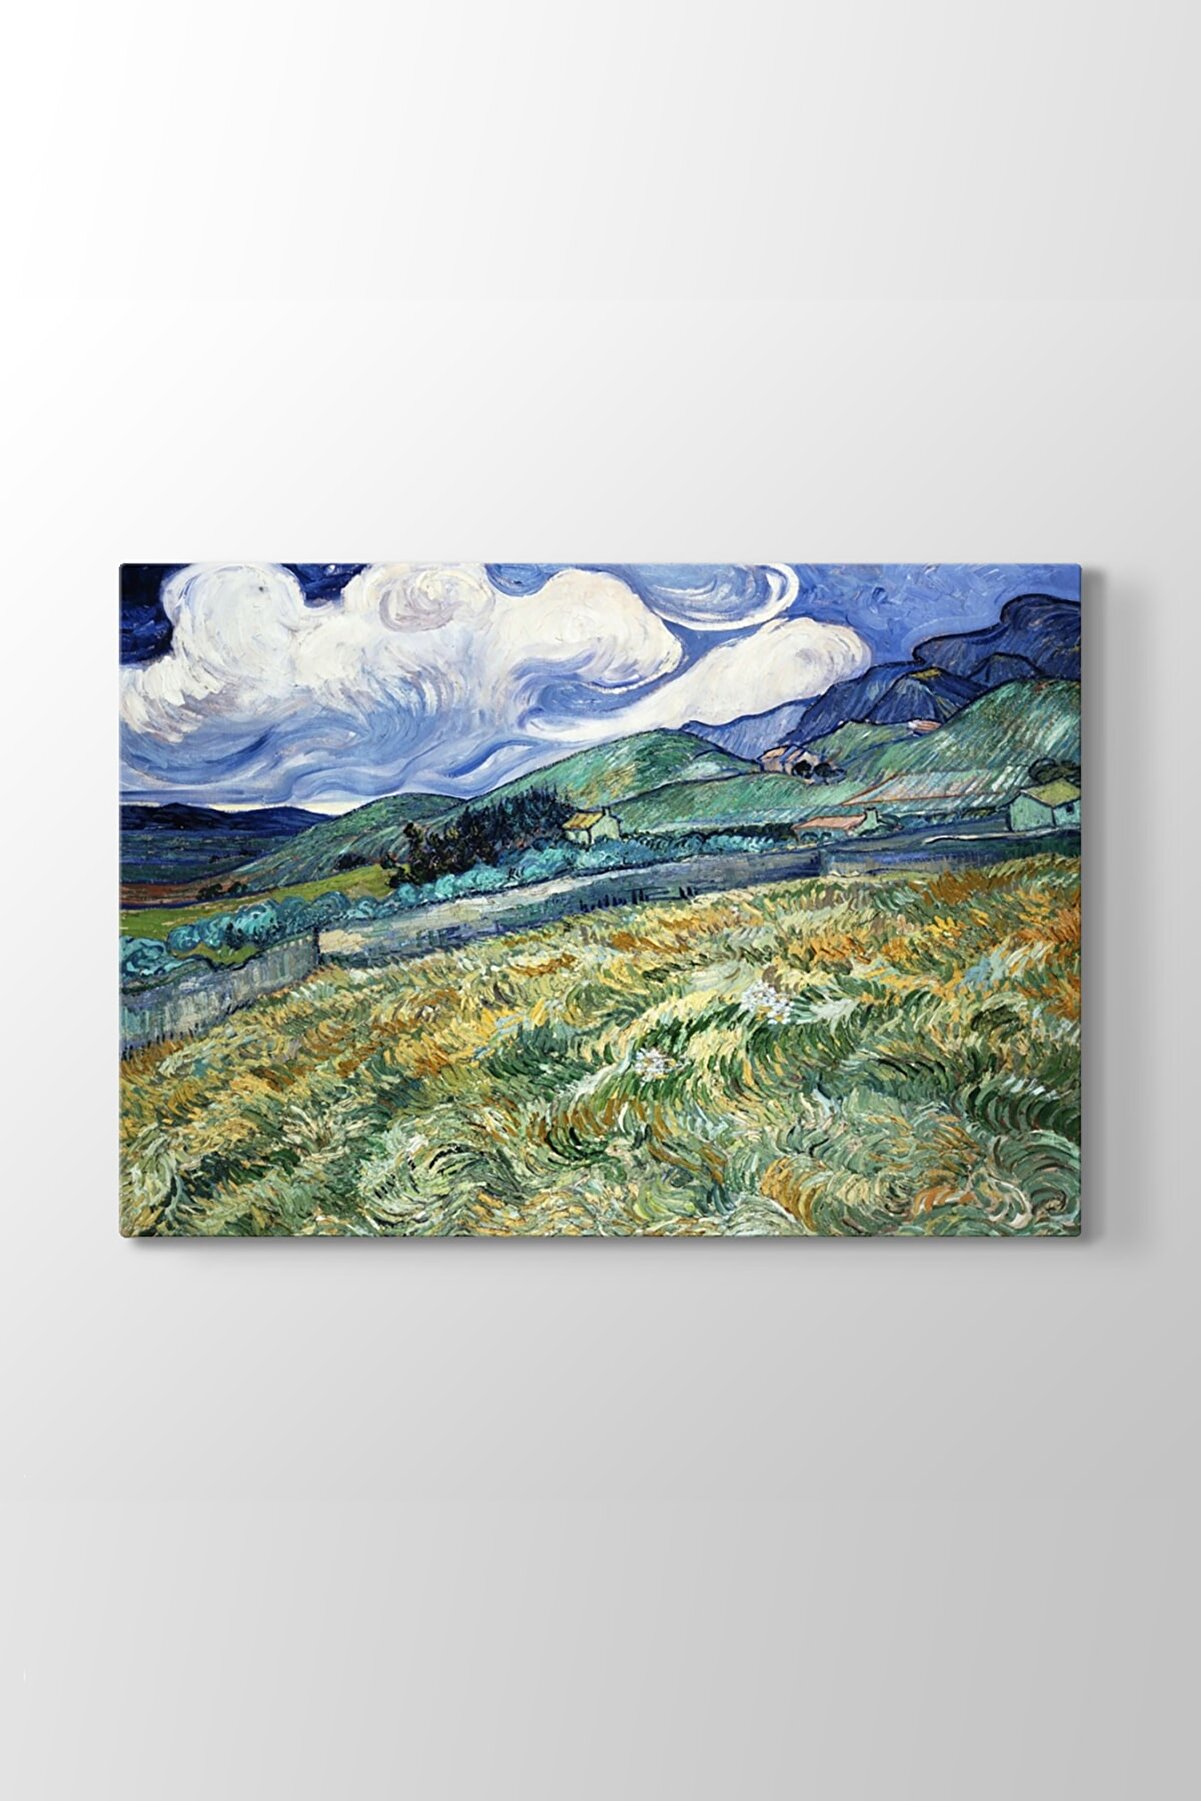 TabloShop Vincent van Gogh - Saint Remy Manzara Tablosu (Model 1) - (ÖLÇÜSÜ 75x50 cm)